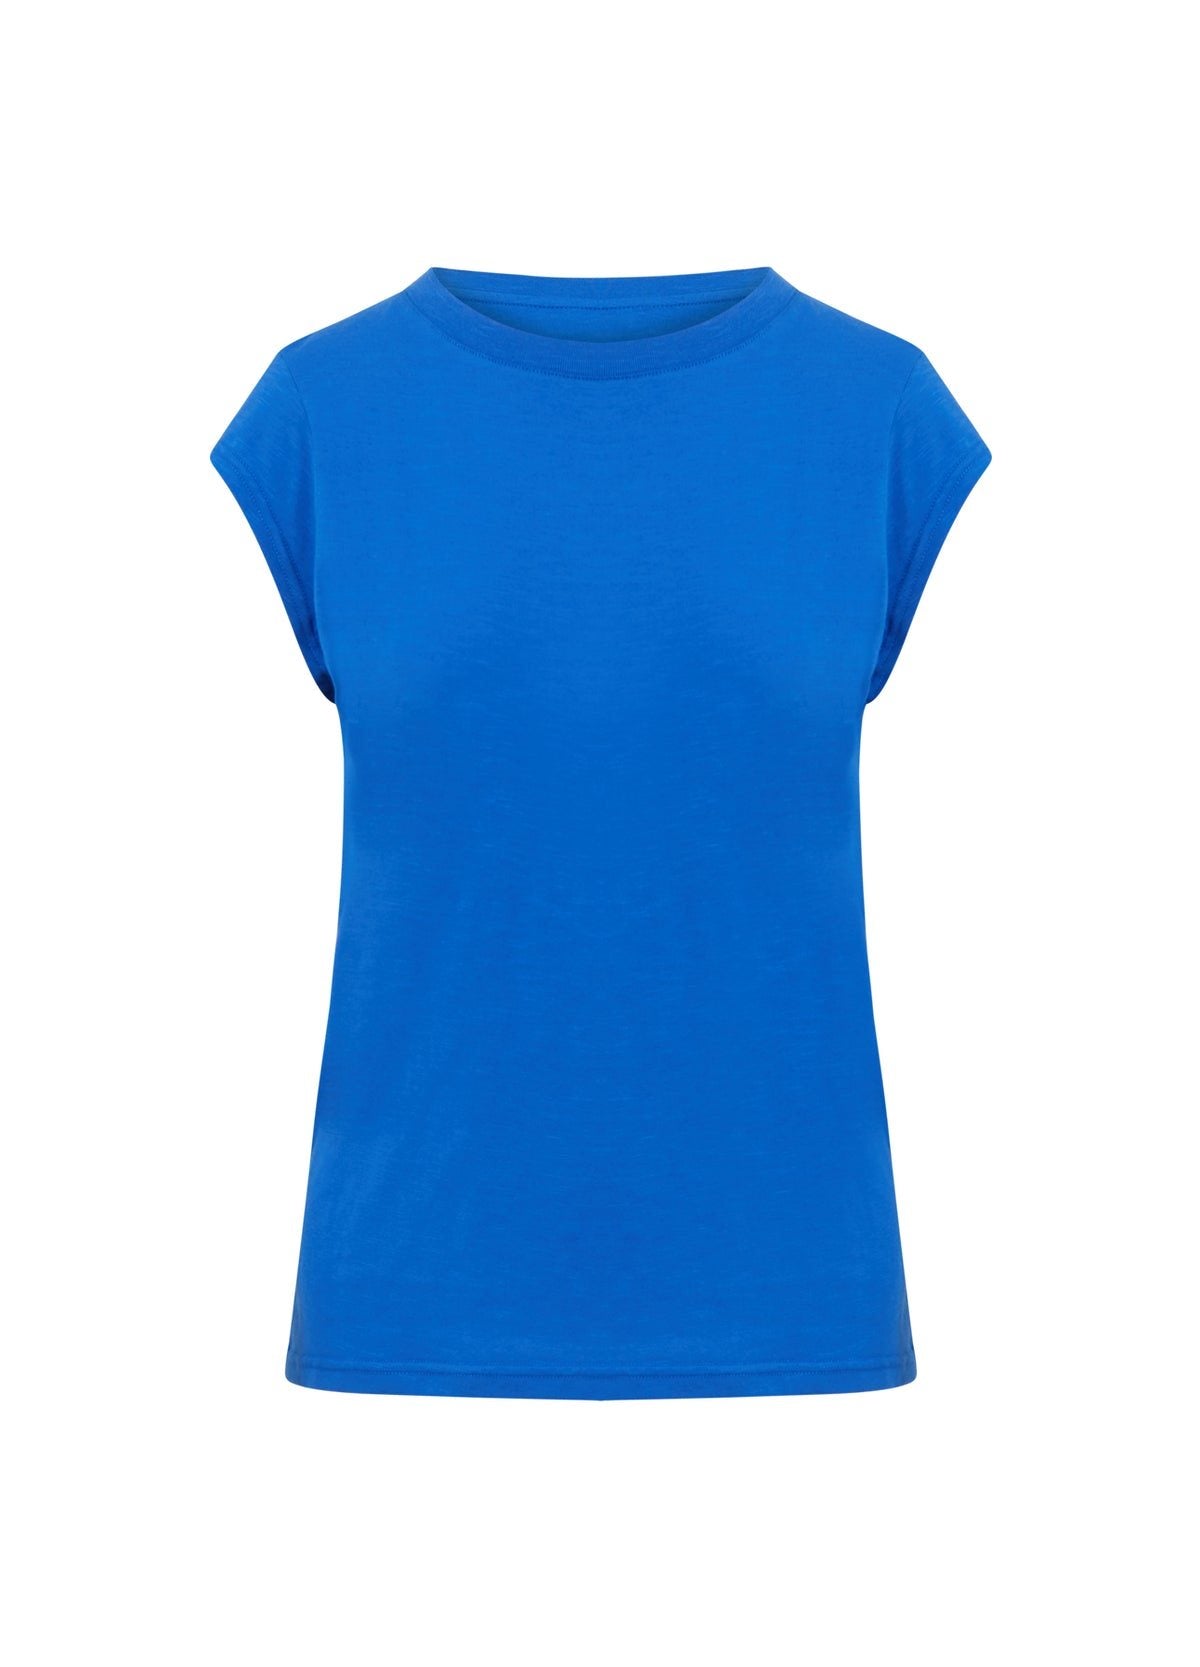 shirt | CC1100 - electric blue